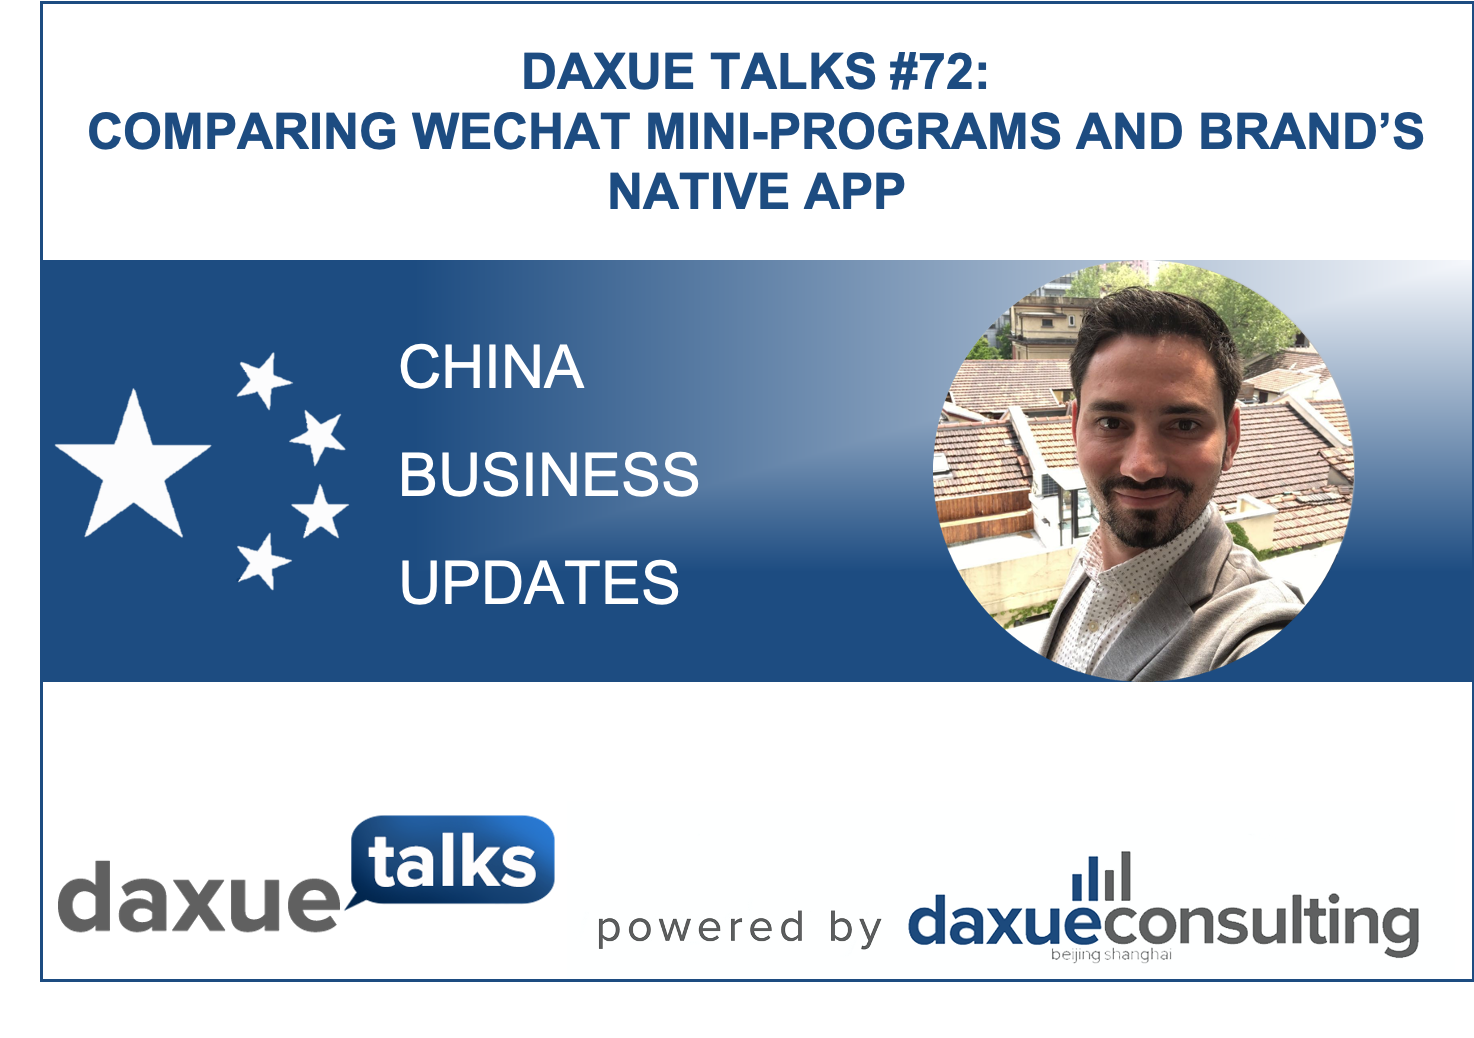 Daxue Talks 72: Comparing WeChat mini-programs and brand’s native app